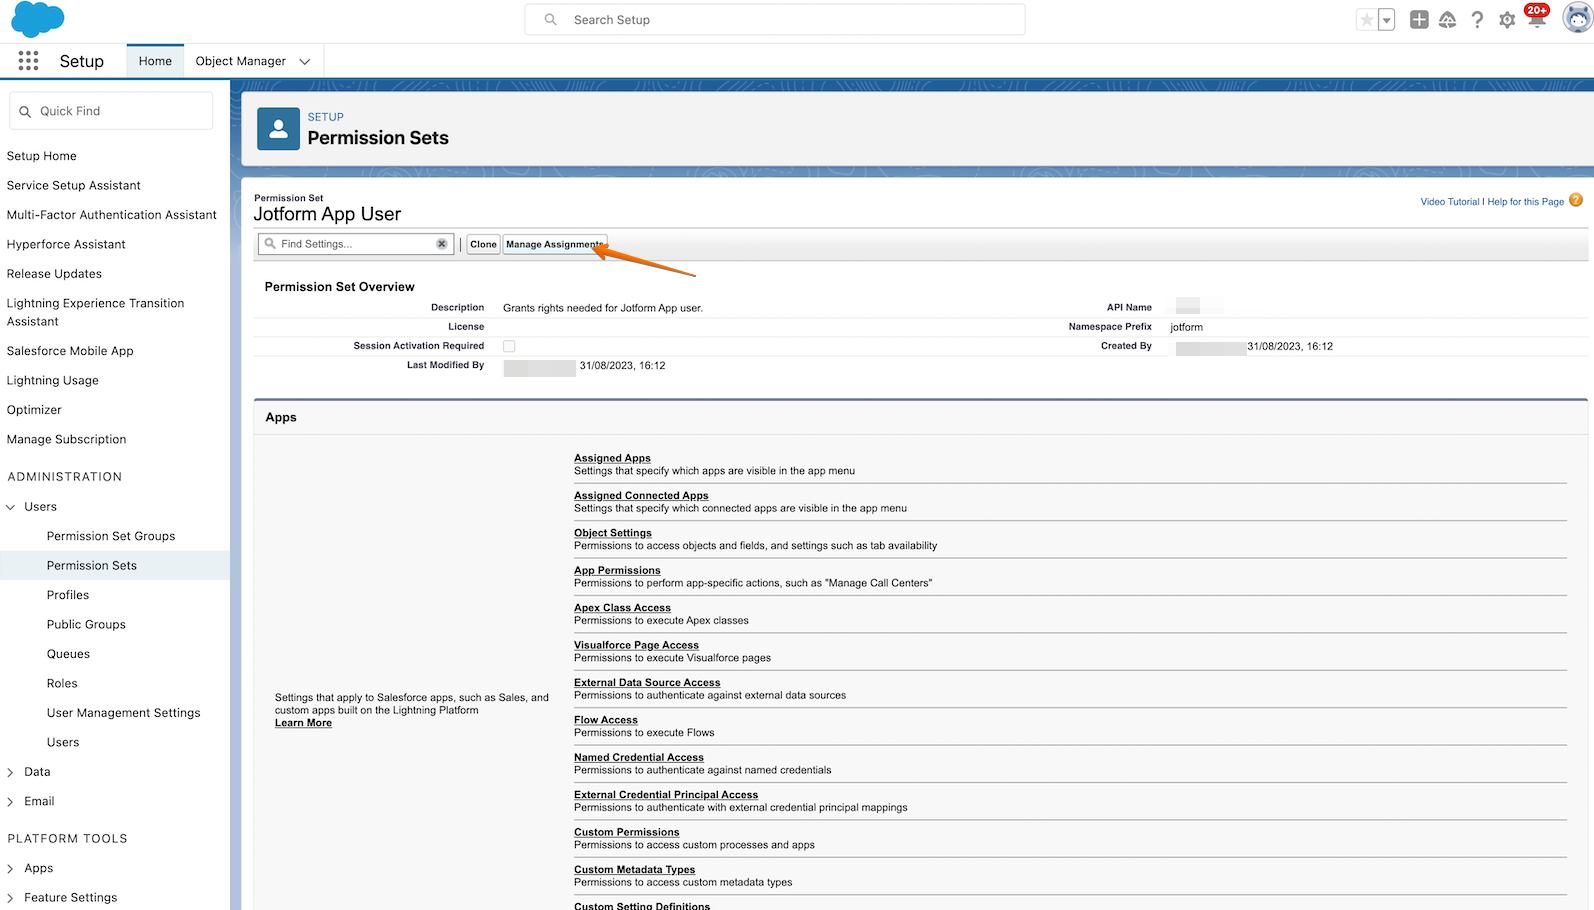 Integrate Jotform with Salesforce Sandbox account Image 4 Screenshot 203 Screenshot 43 Screenshot 43 Screenshot 43